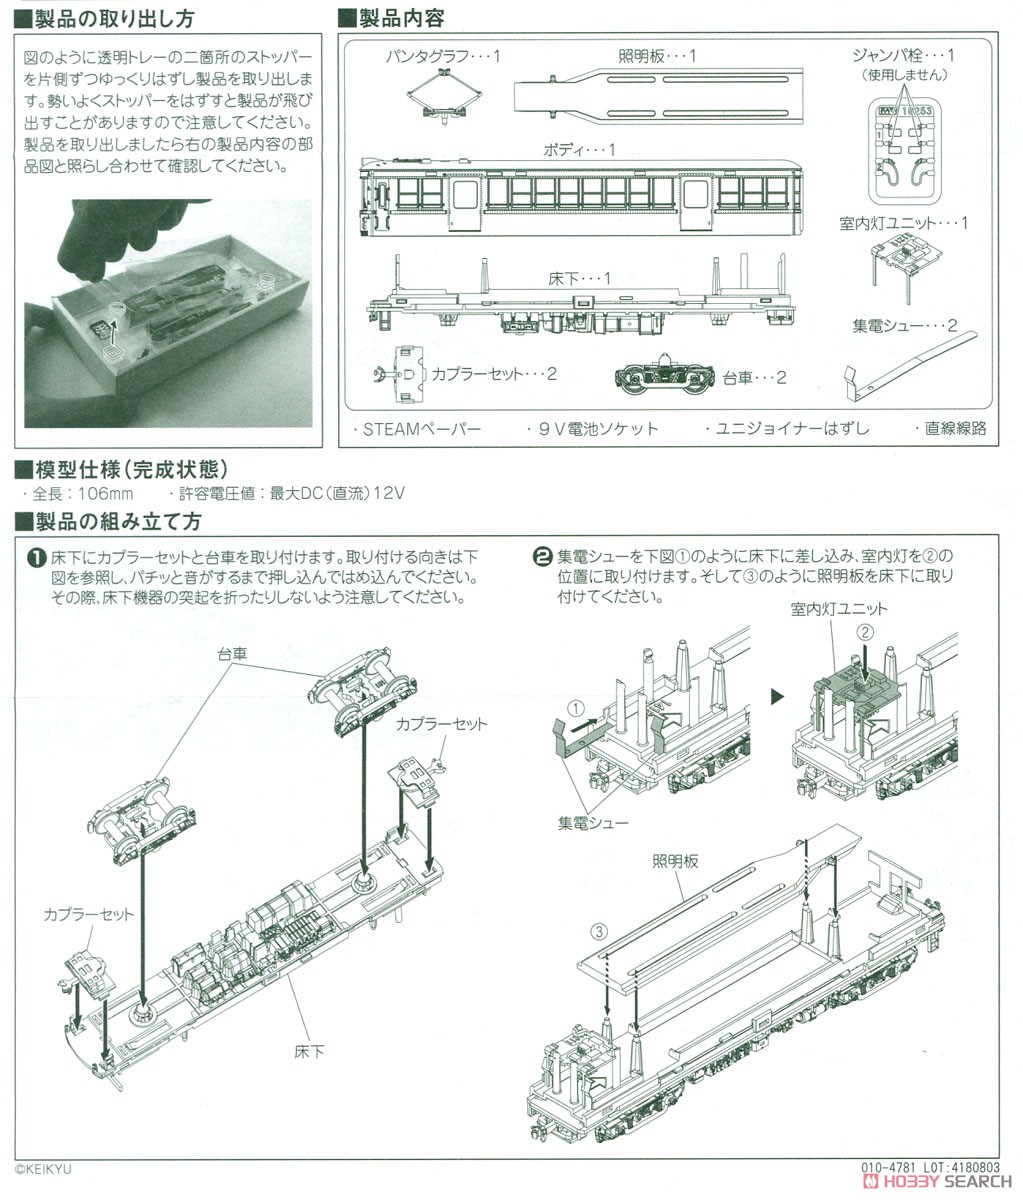 STEAMで深まる 赤い電車キット (組み立てキット) (鉄道模型) 設計図1